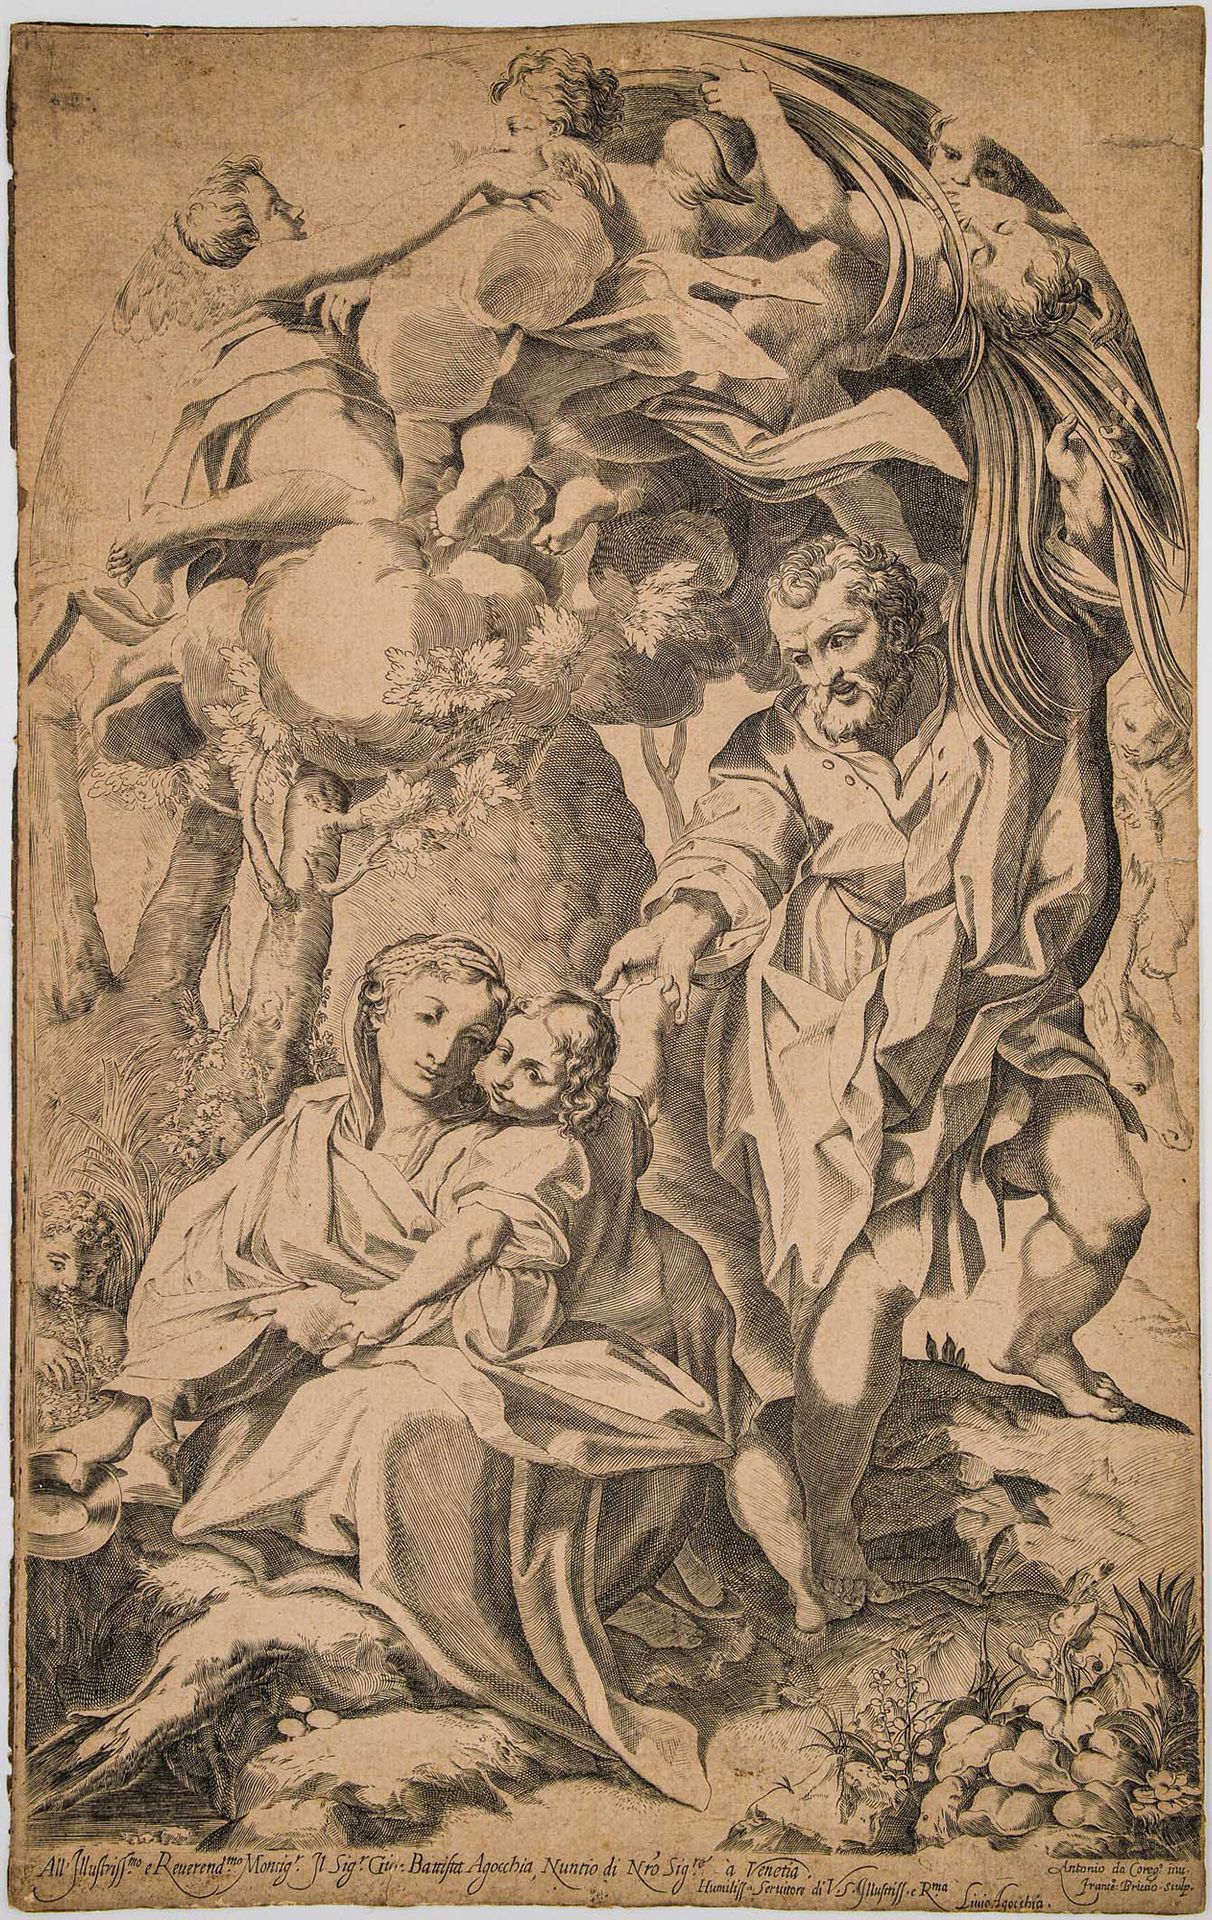 Null 弗朗西斯科-布里齐奥（博洛尼亚1574年-博洛尼亚1623年），《碗里的圣母》。

17世纪初

蚀刻在略微烧过的原生纸上，圈内有百合花水印

50x&hellip;